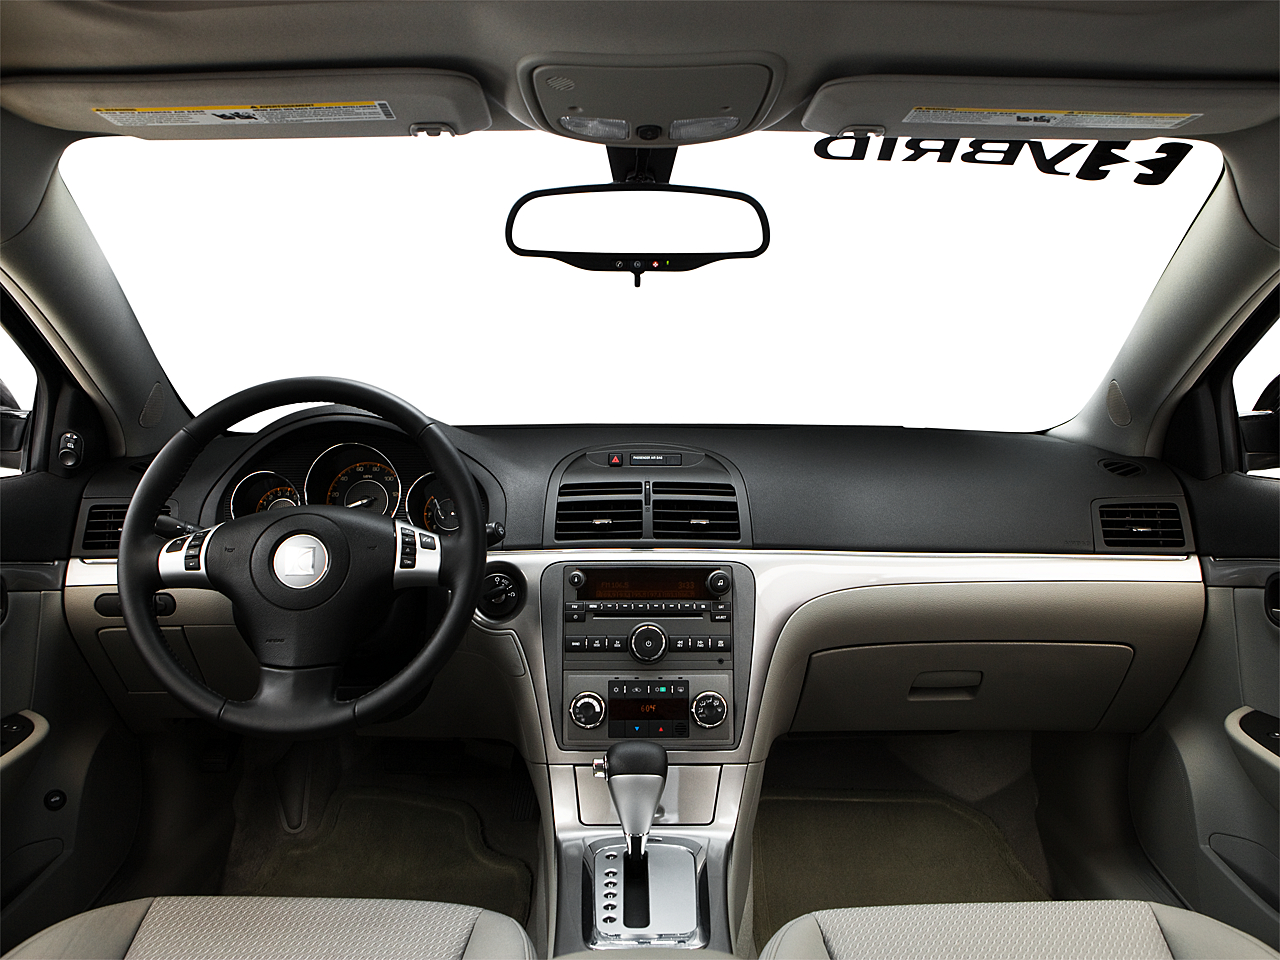 2009 Saturn Aura Hybrid 4dr Sedan - Research - GrooveCar